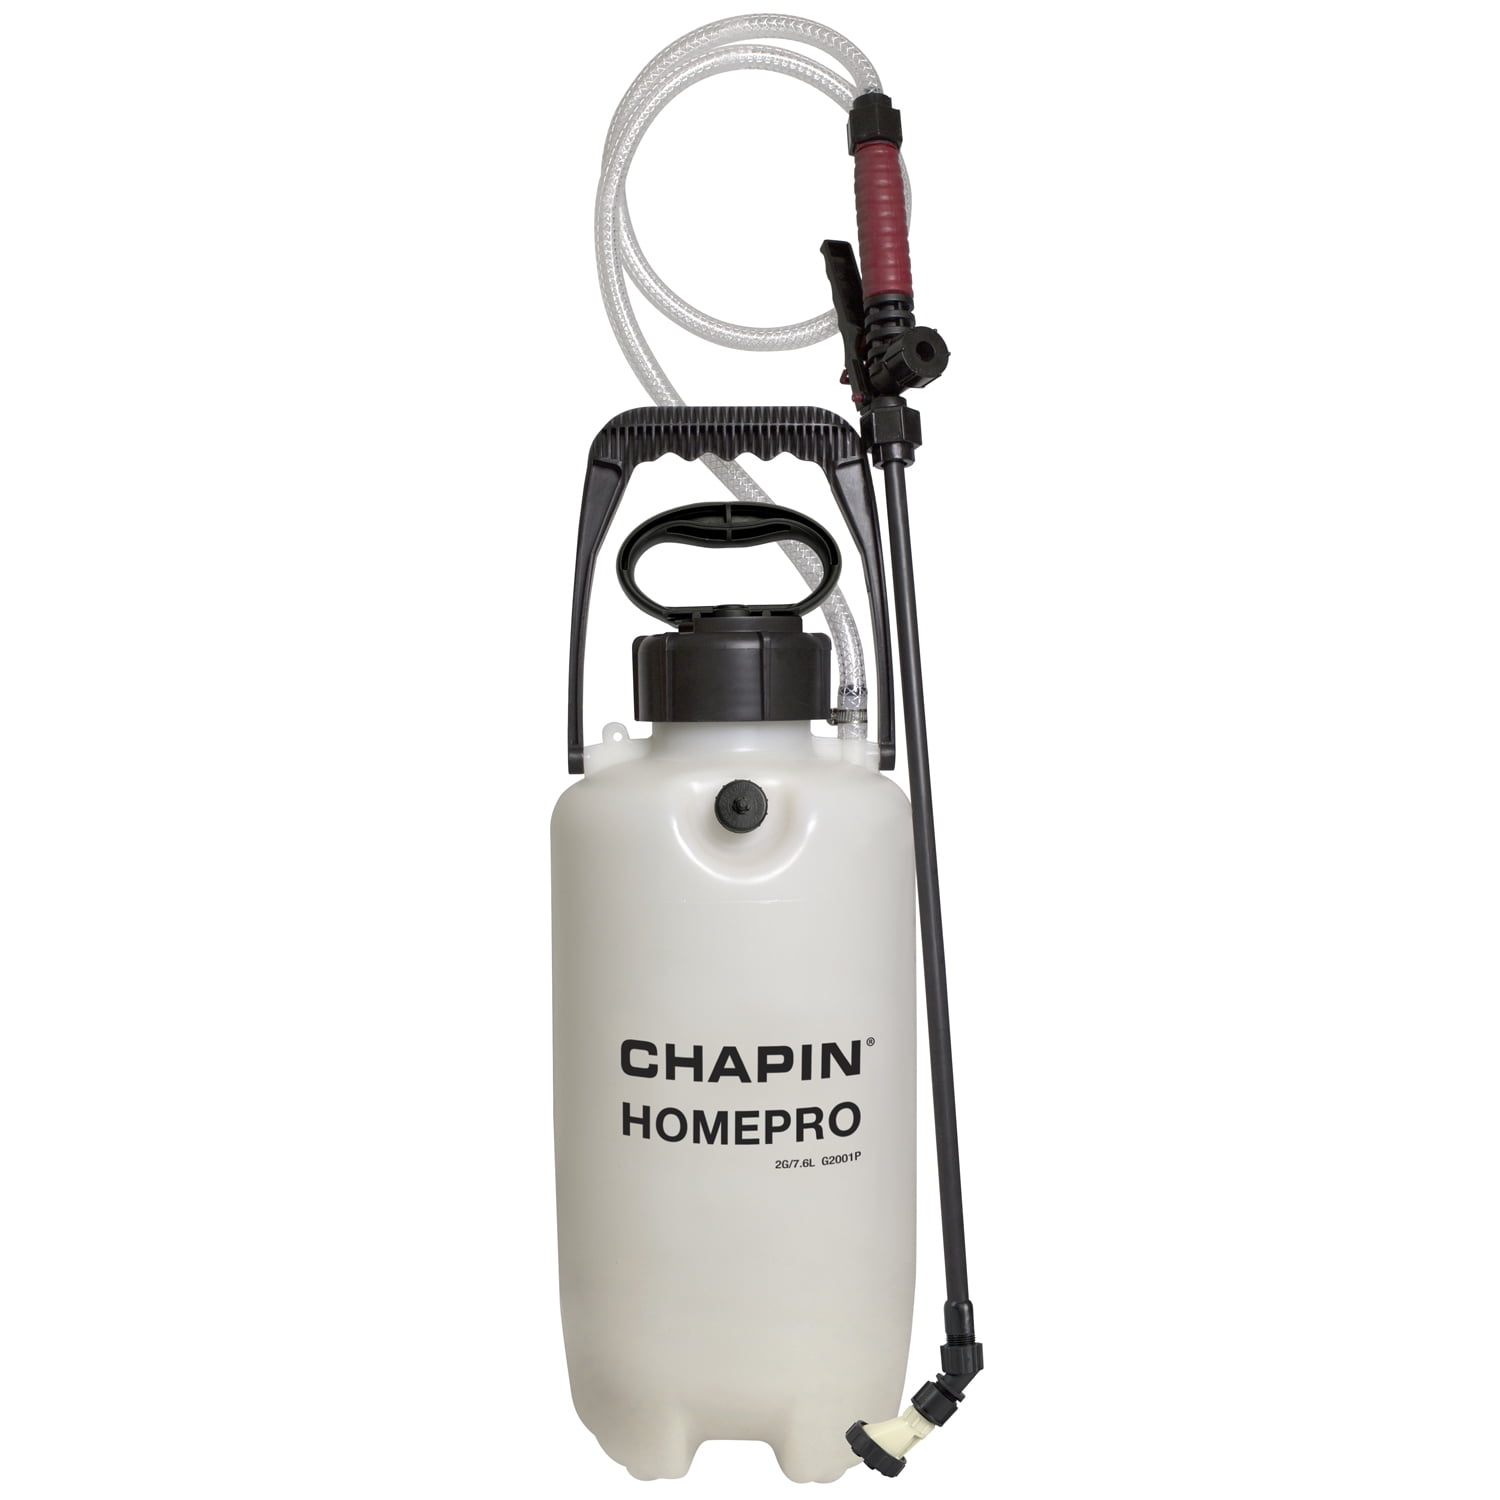 Chapin 1352 Premium Industrial 3 Gal Heavy Duty Metal Sprayer w/ Viton Seals